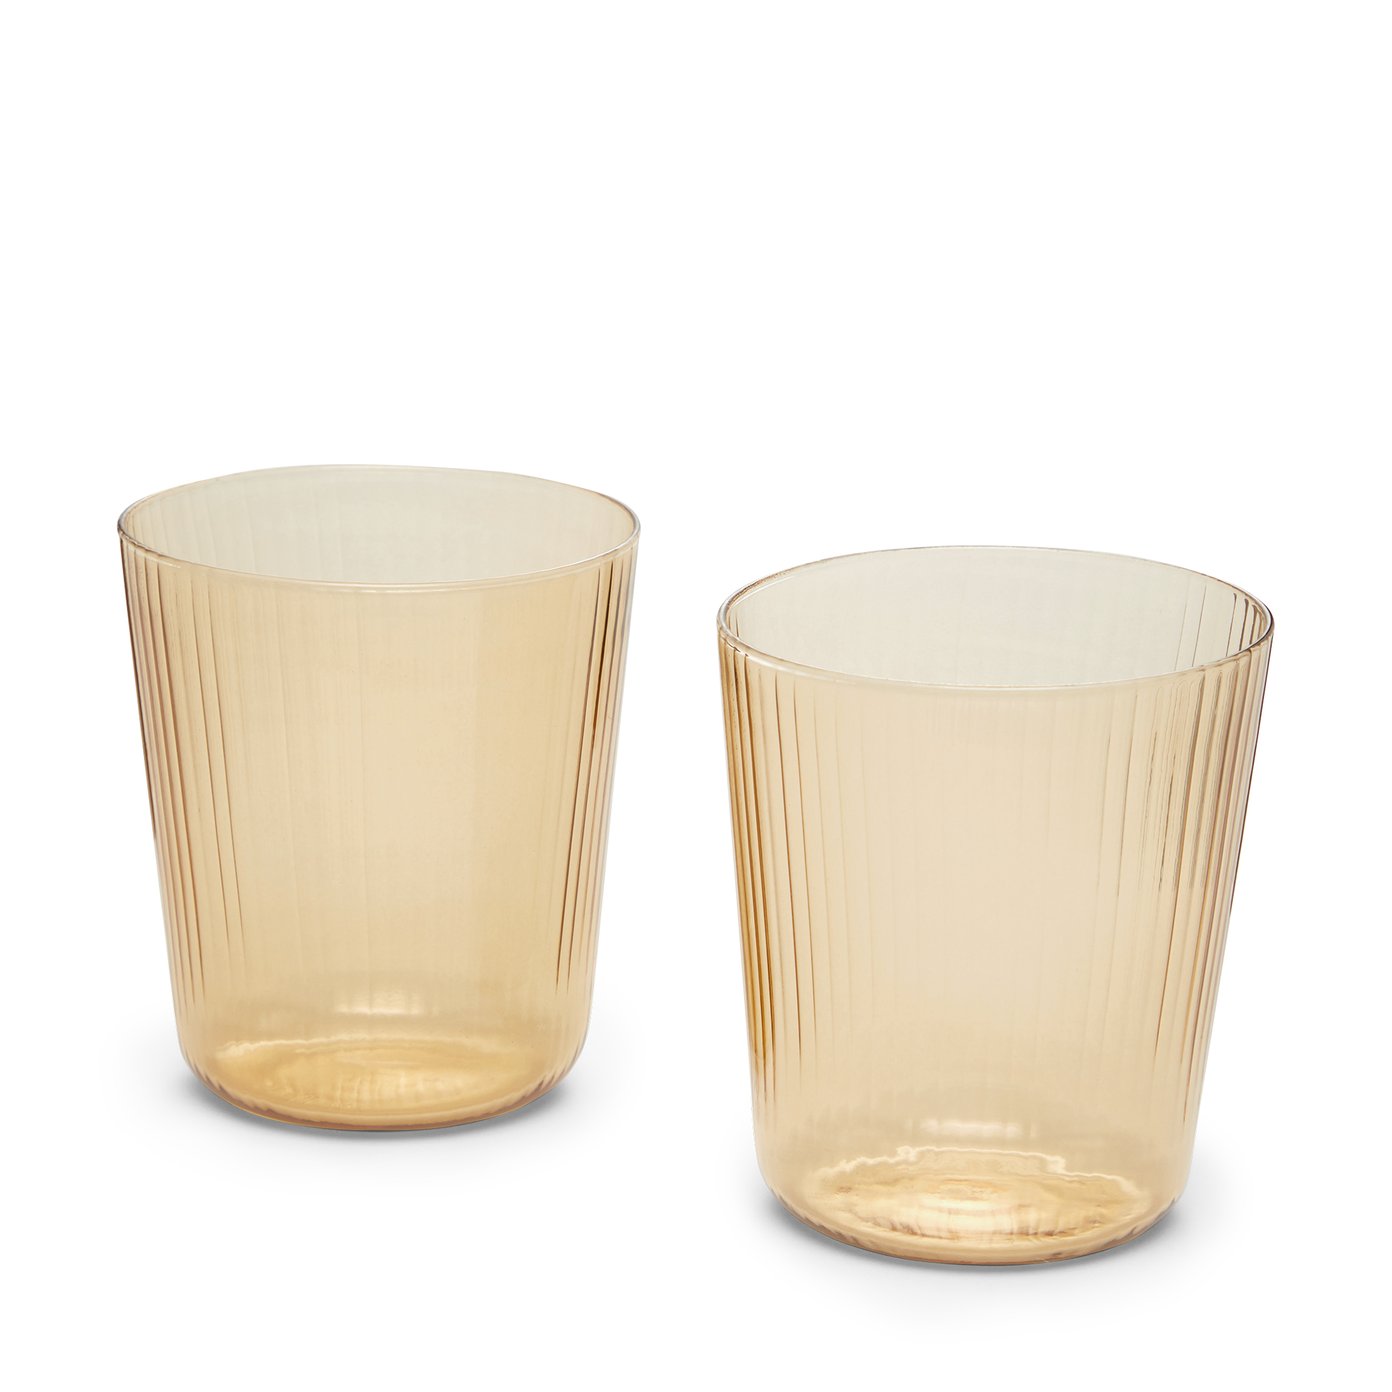 Shop Stylish & High-Quality Glass Drinkware